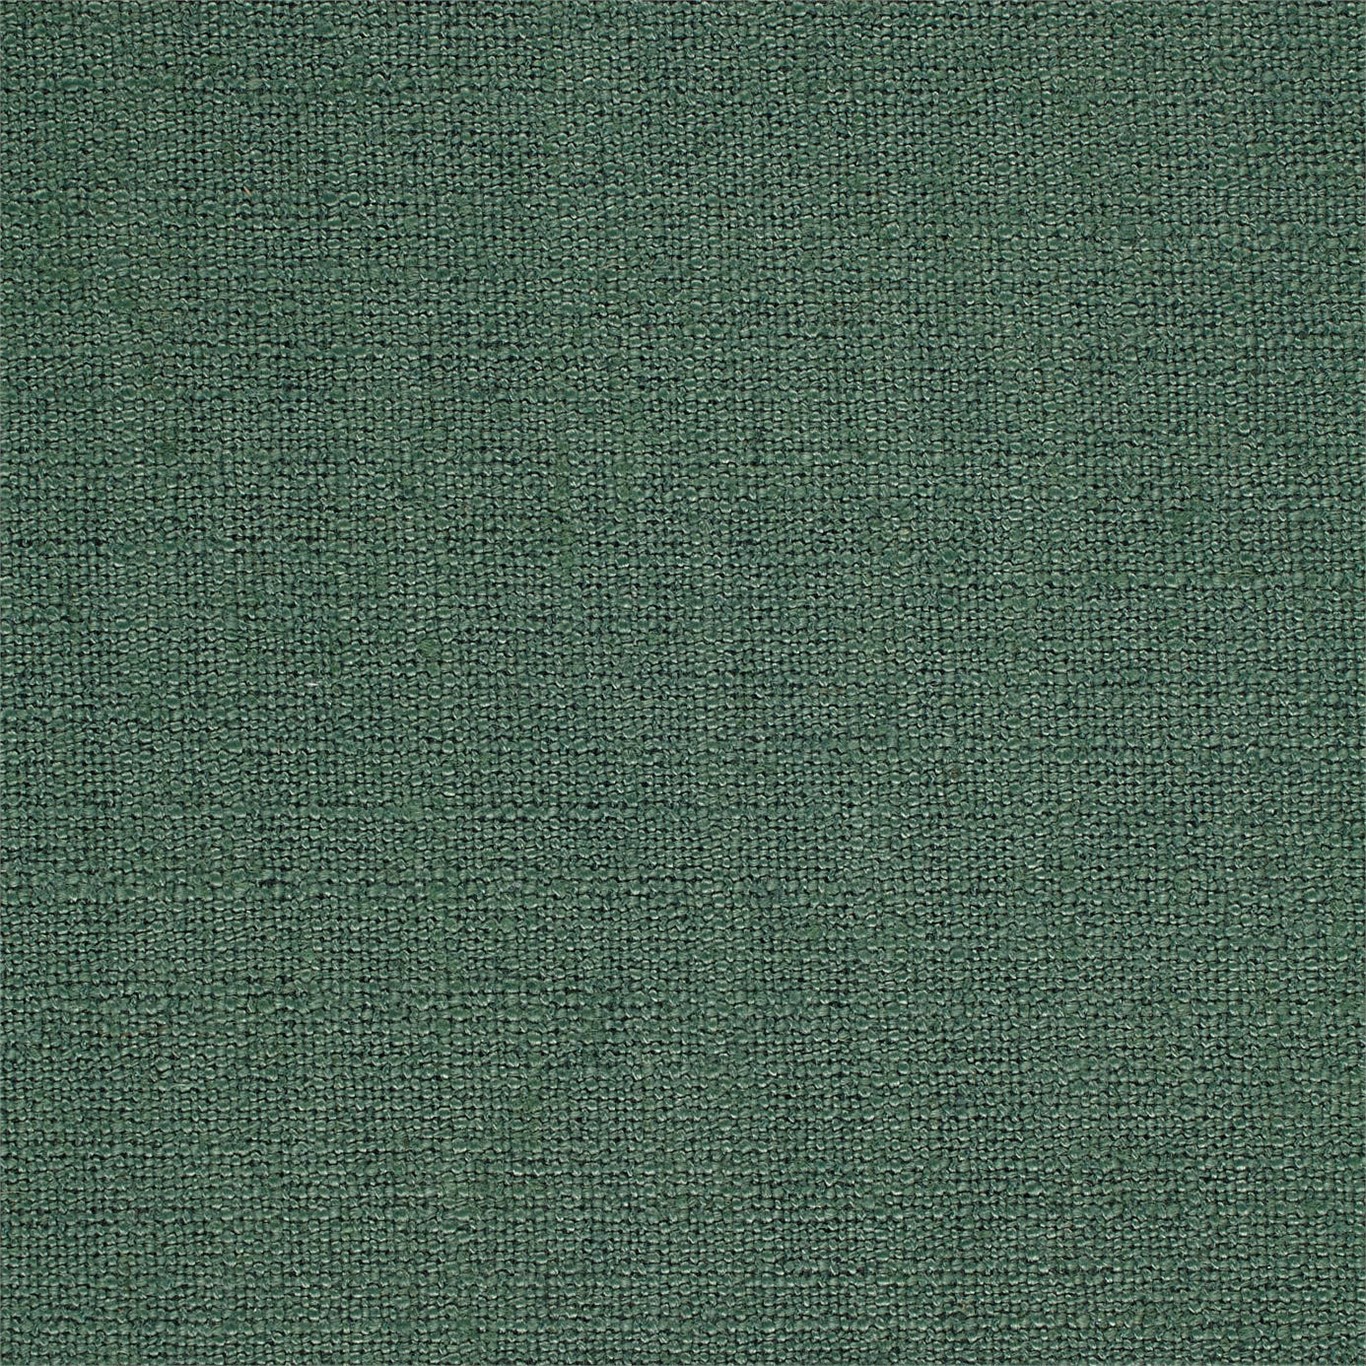 Lagom Jade Fabric by SAN